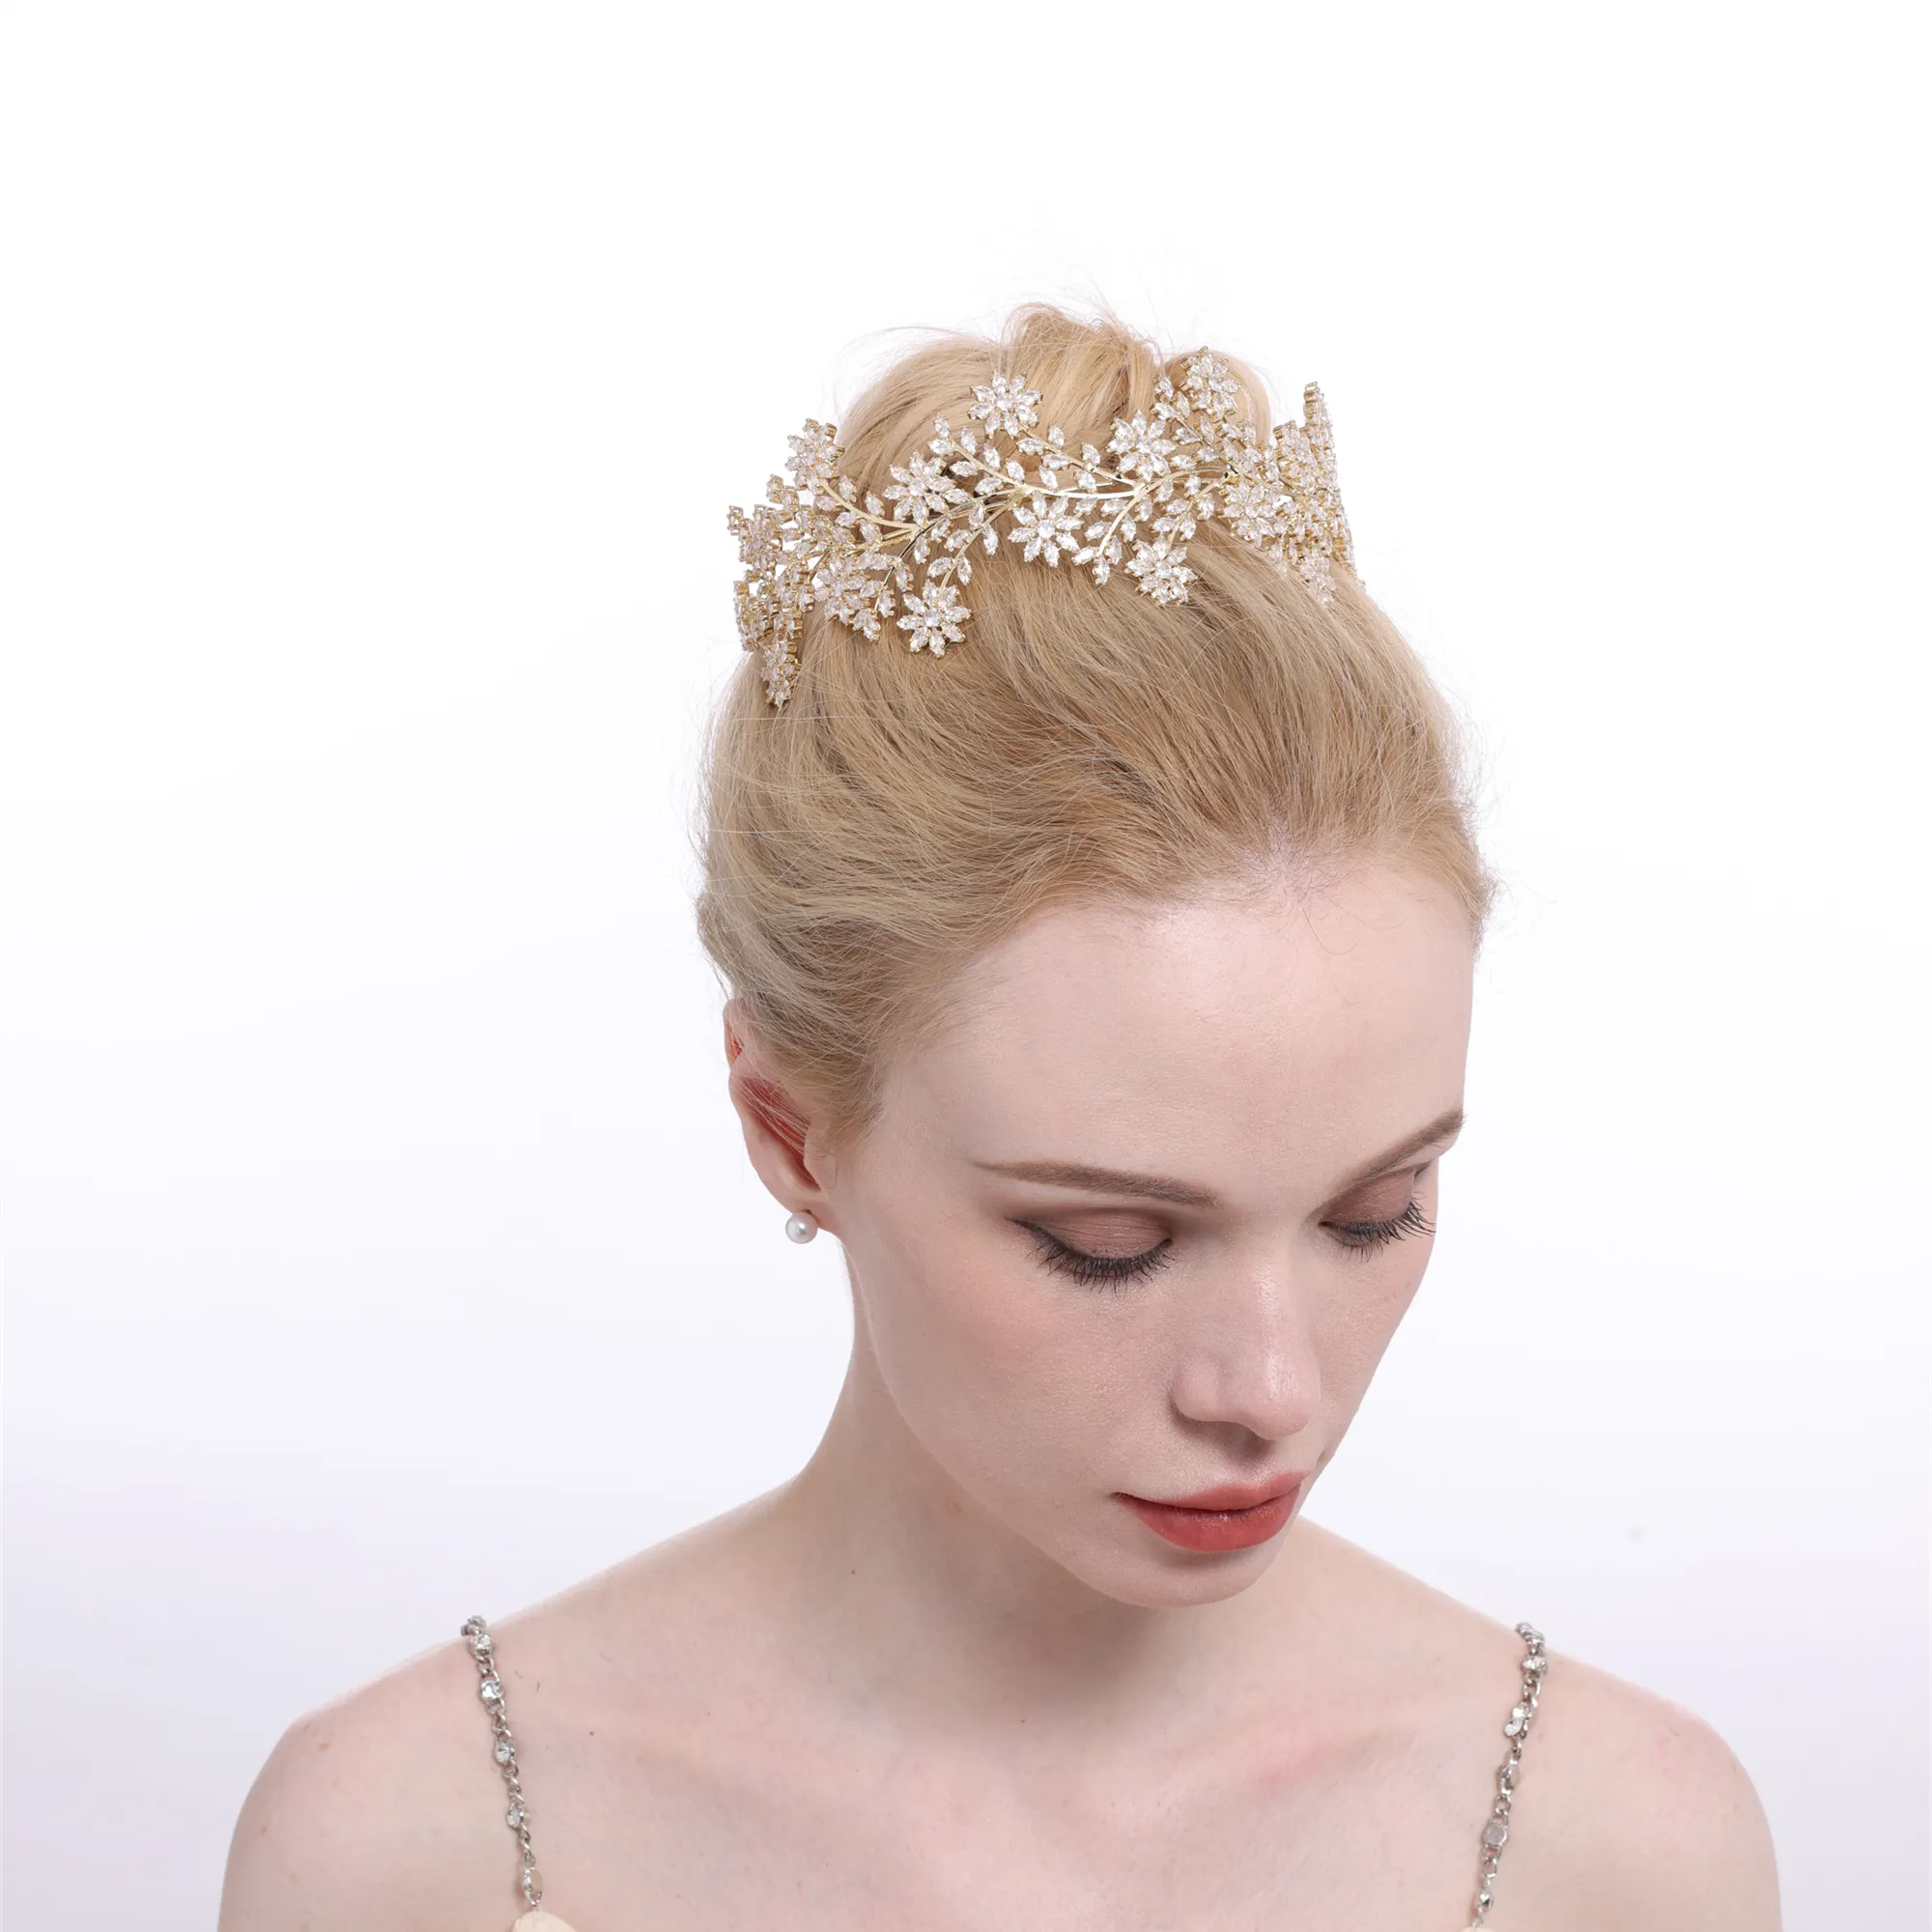 New Korean women Pageant Jewelry Hair Accessories Cubic Zirconia bride Wedding Bridal zircon tiaras crowns